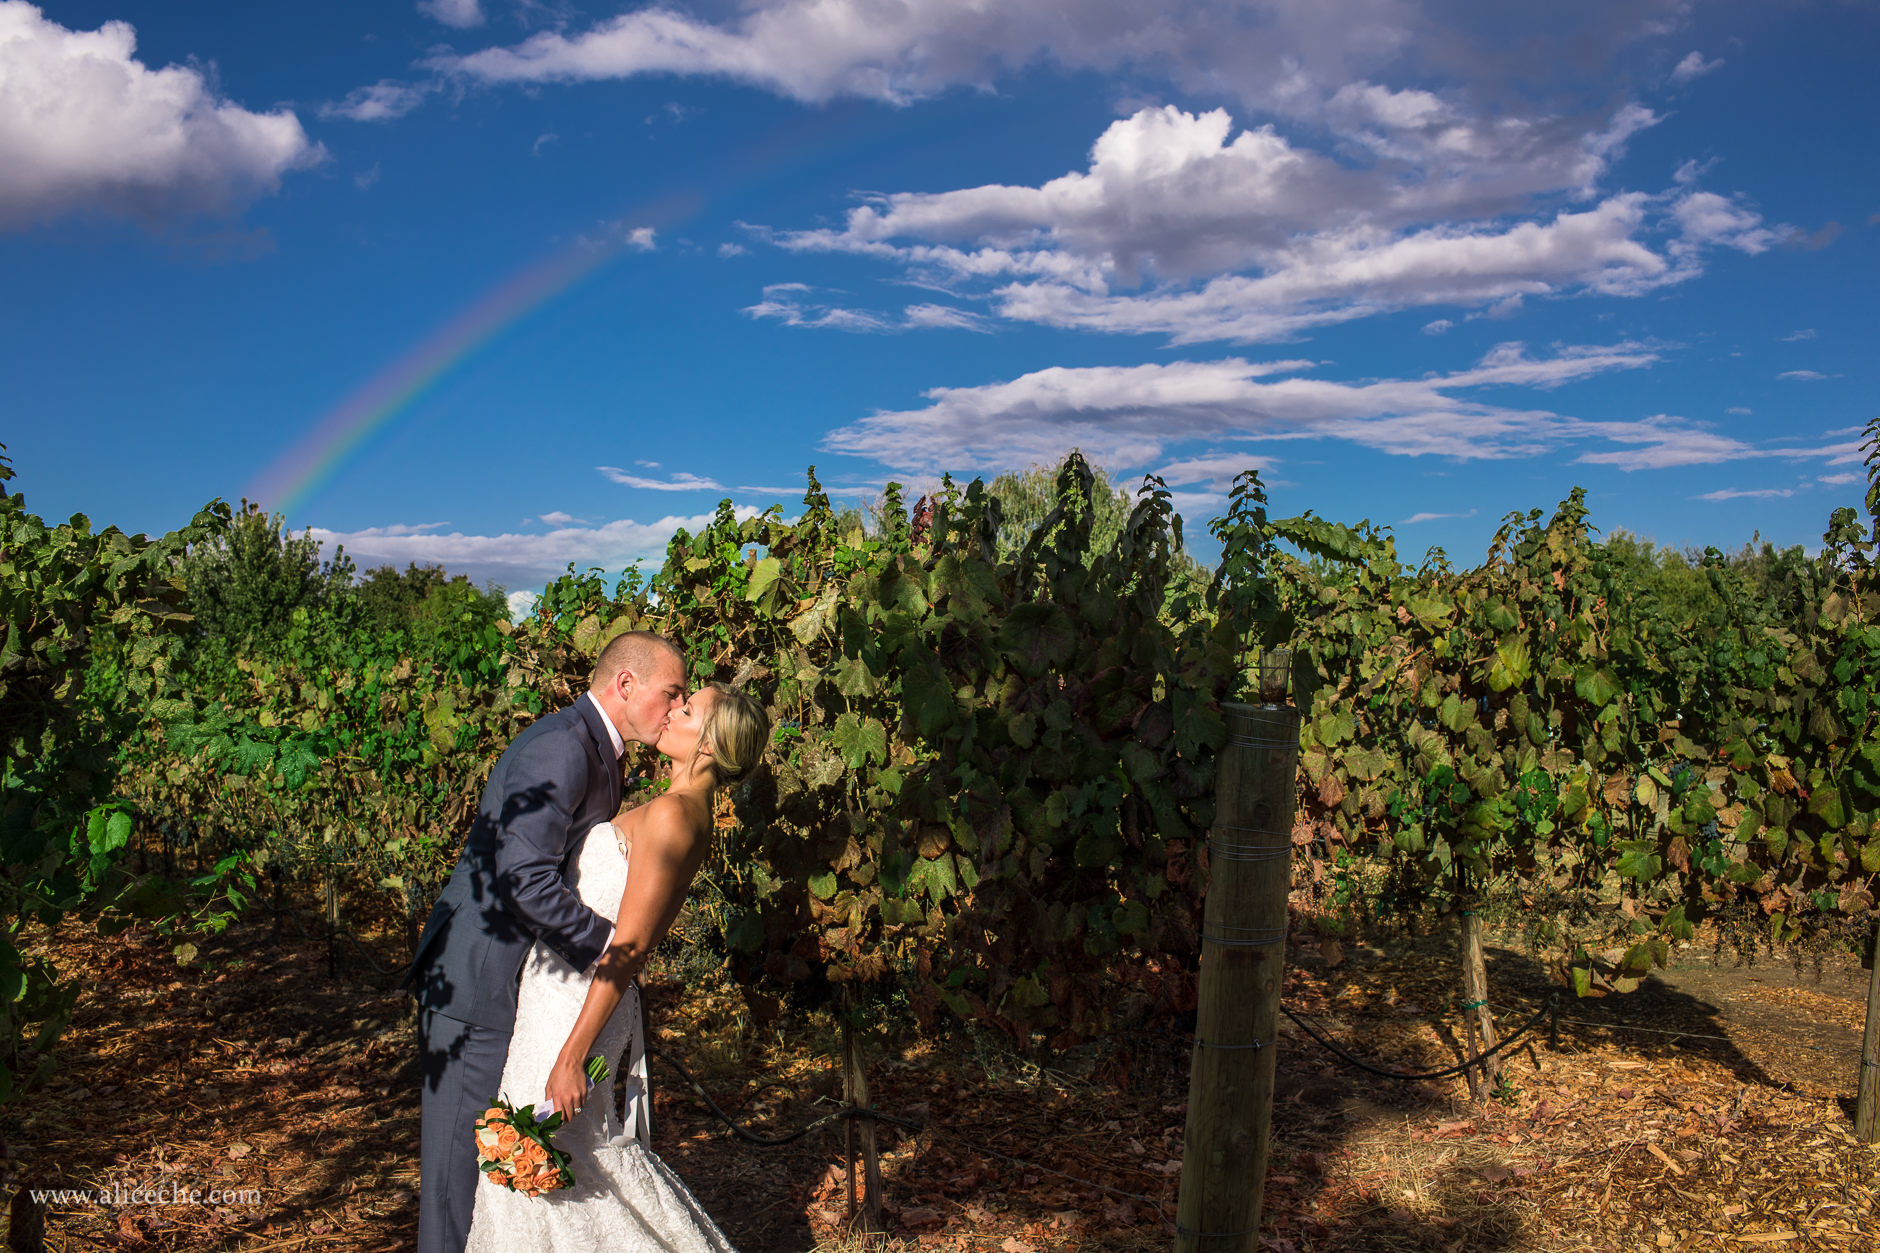 Loomis Flower Farm Wedding San Francisco Bay Area Photographer Just Married Couple Kissing Under Rainbow